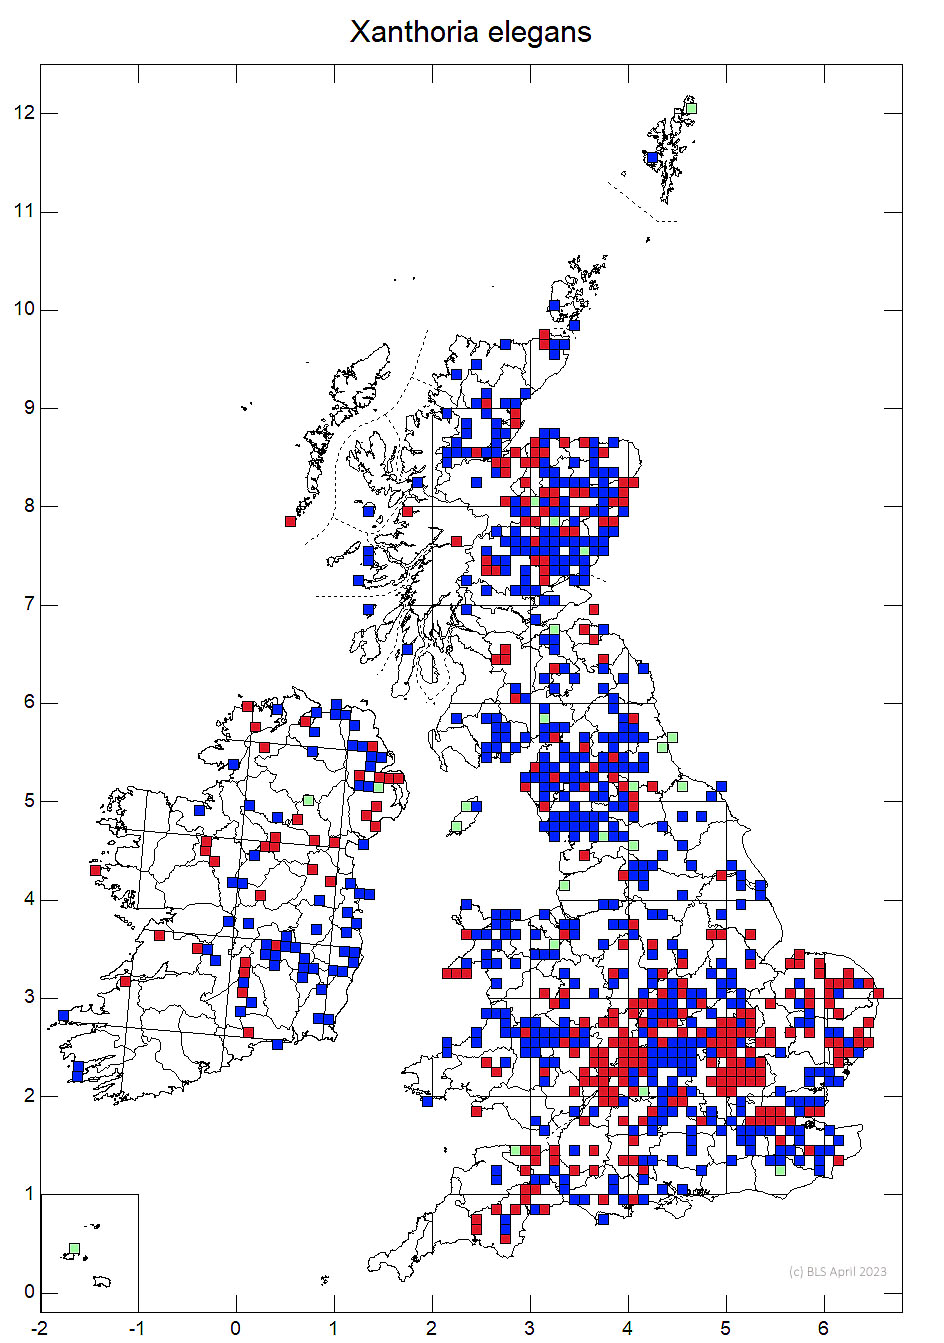 Xanthoria elegans 10km sq distribution map